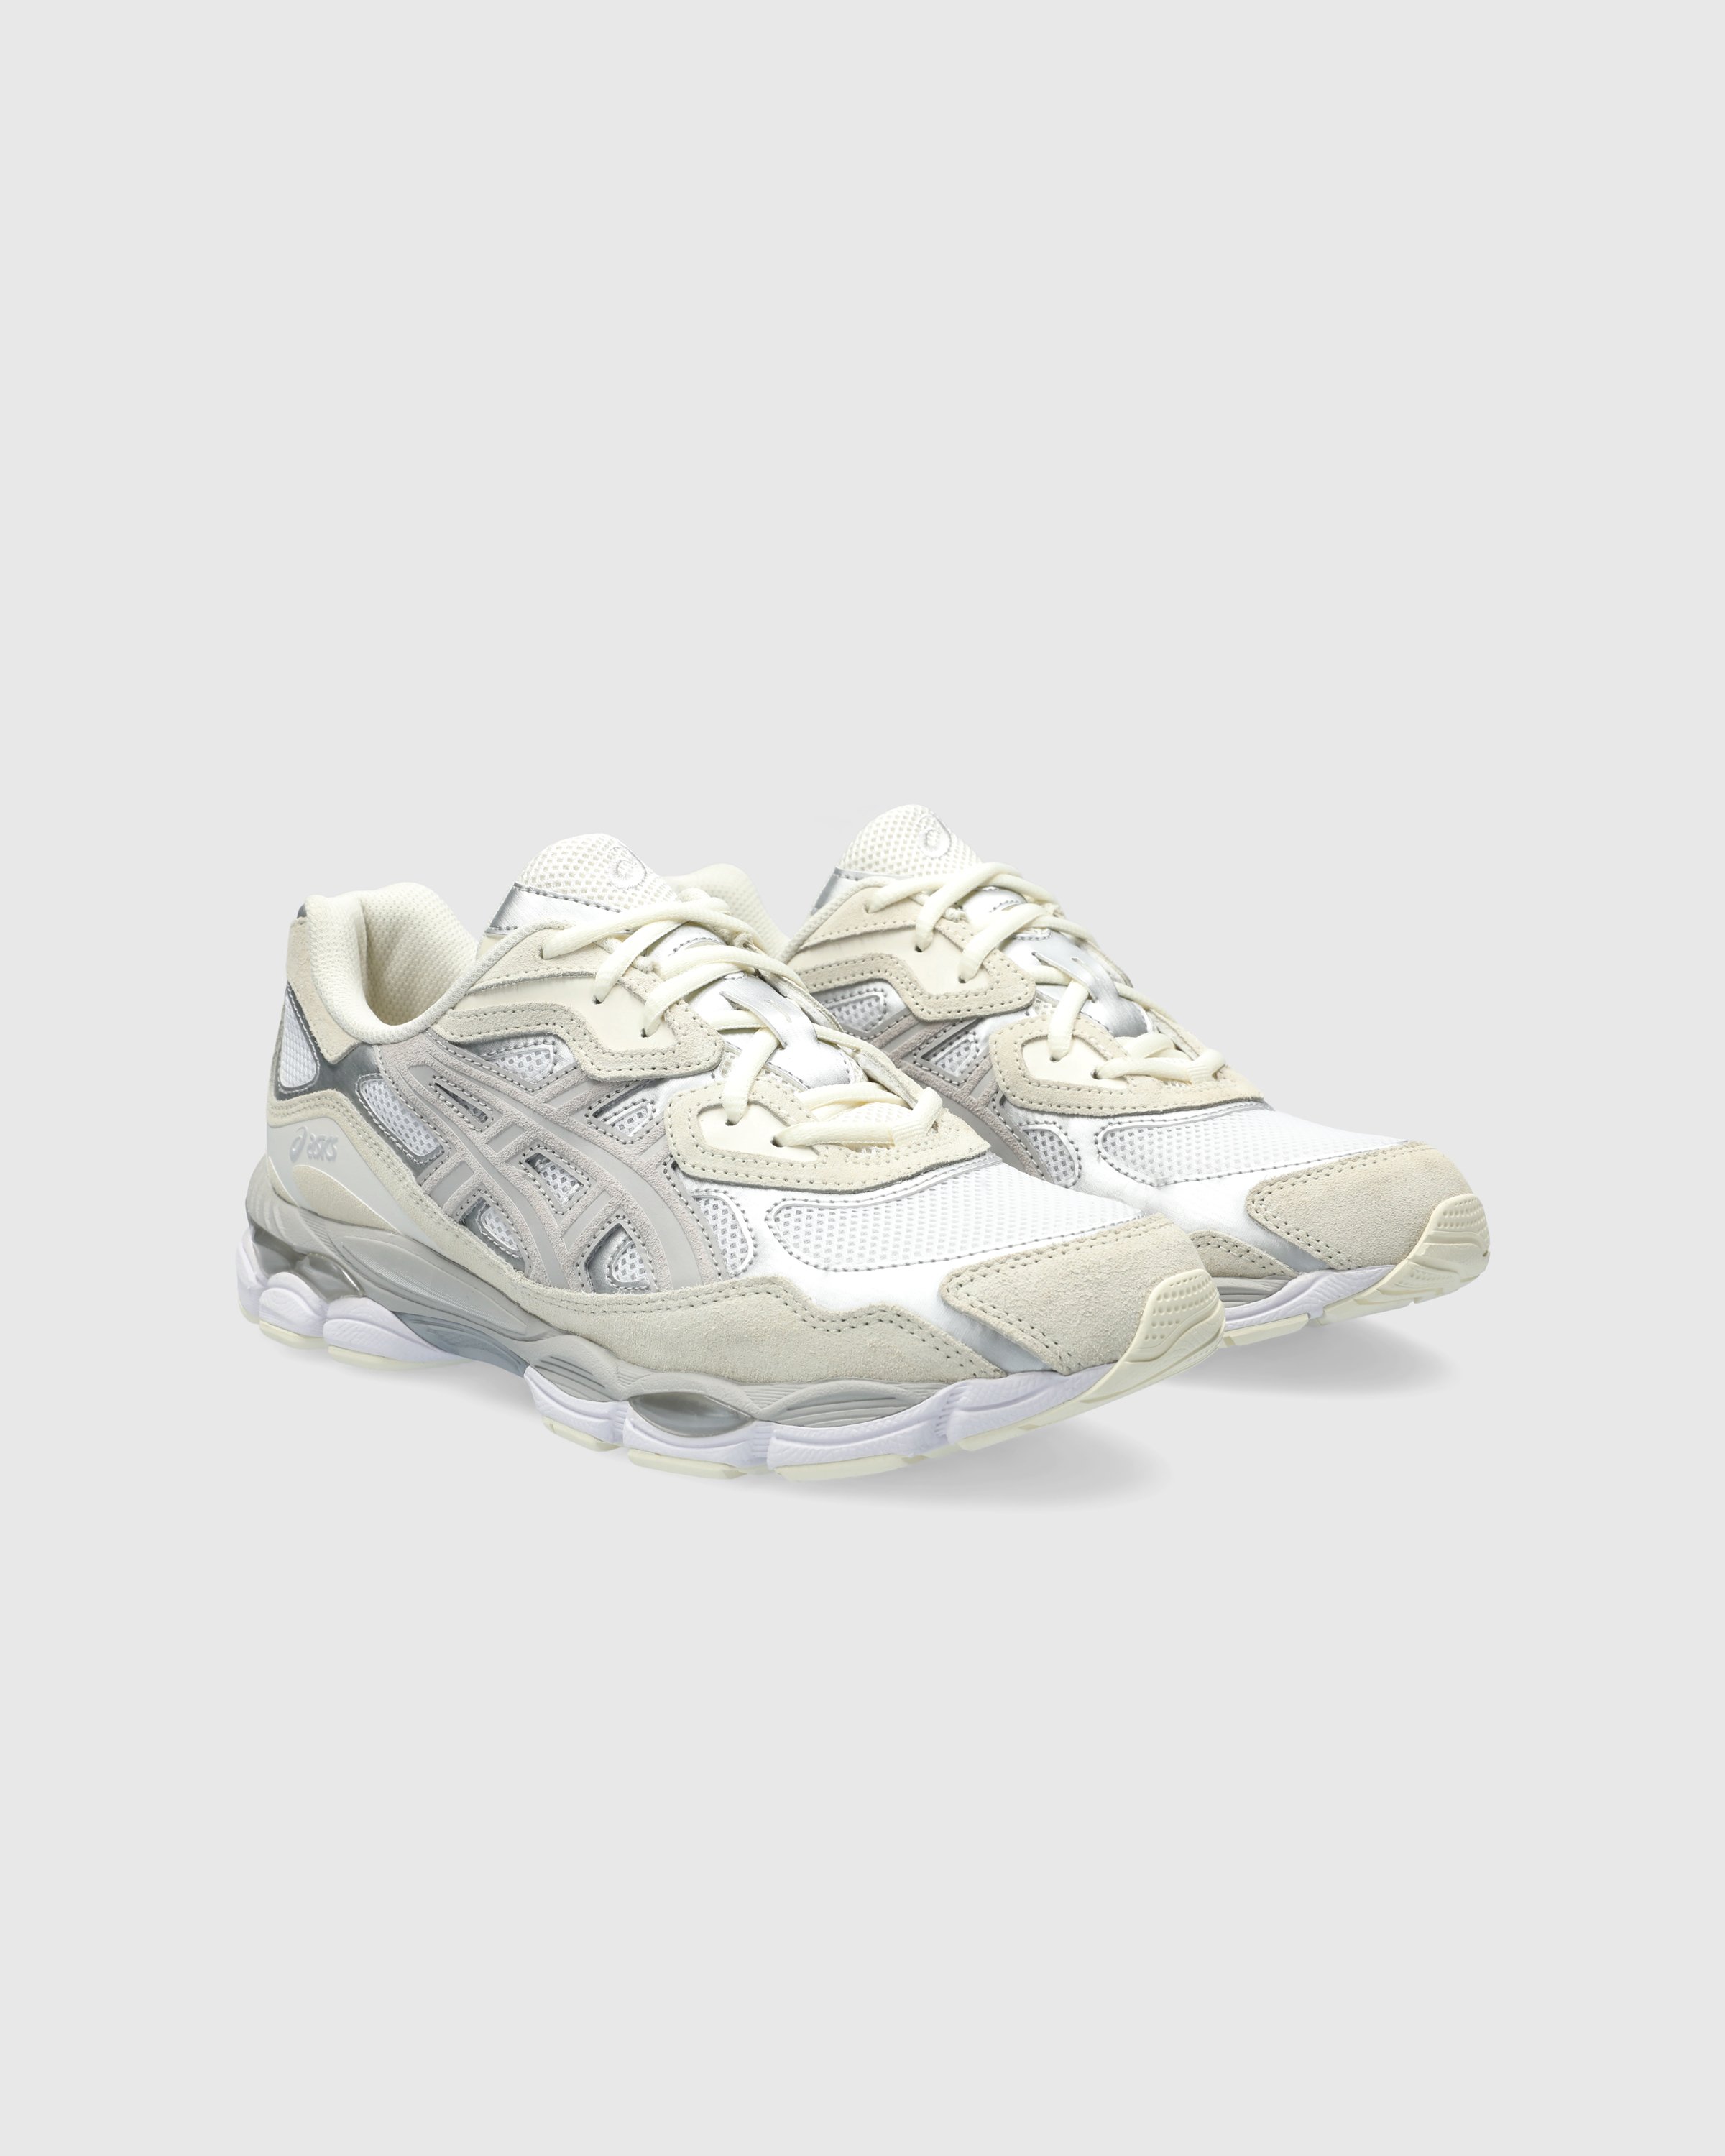 asics - GEL-NYC White/Oyster Grey - Footwear - Multi - Image 3